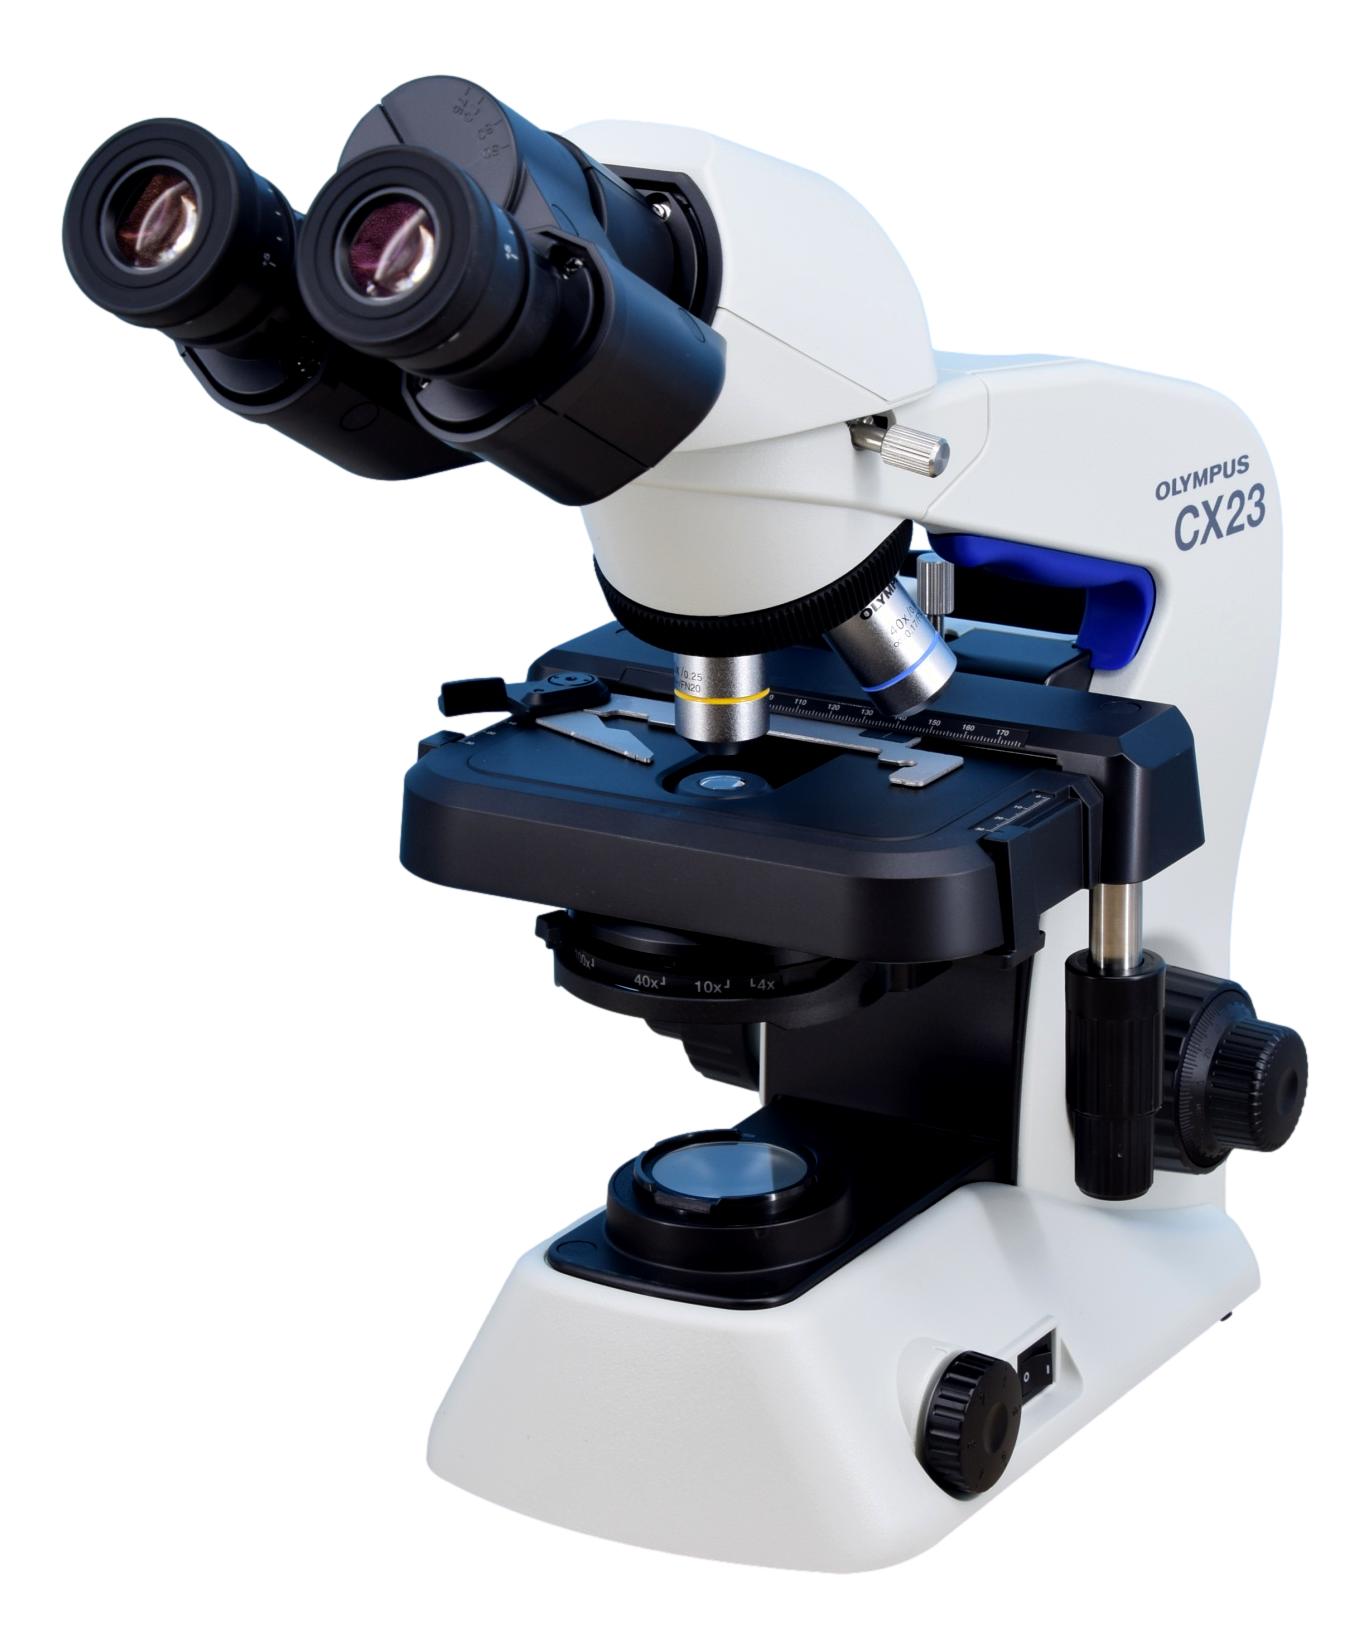 Olympus CX23, CX23 Microscope